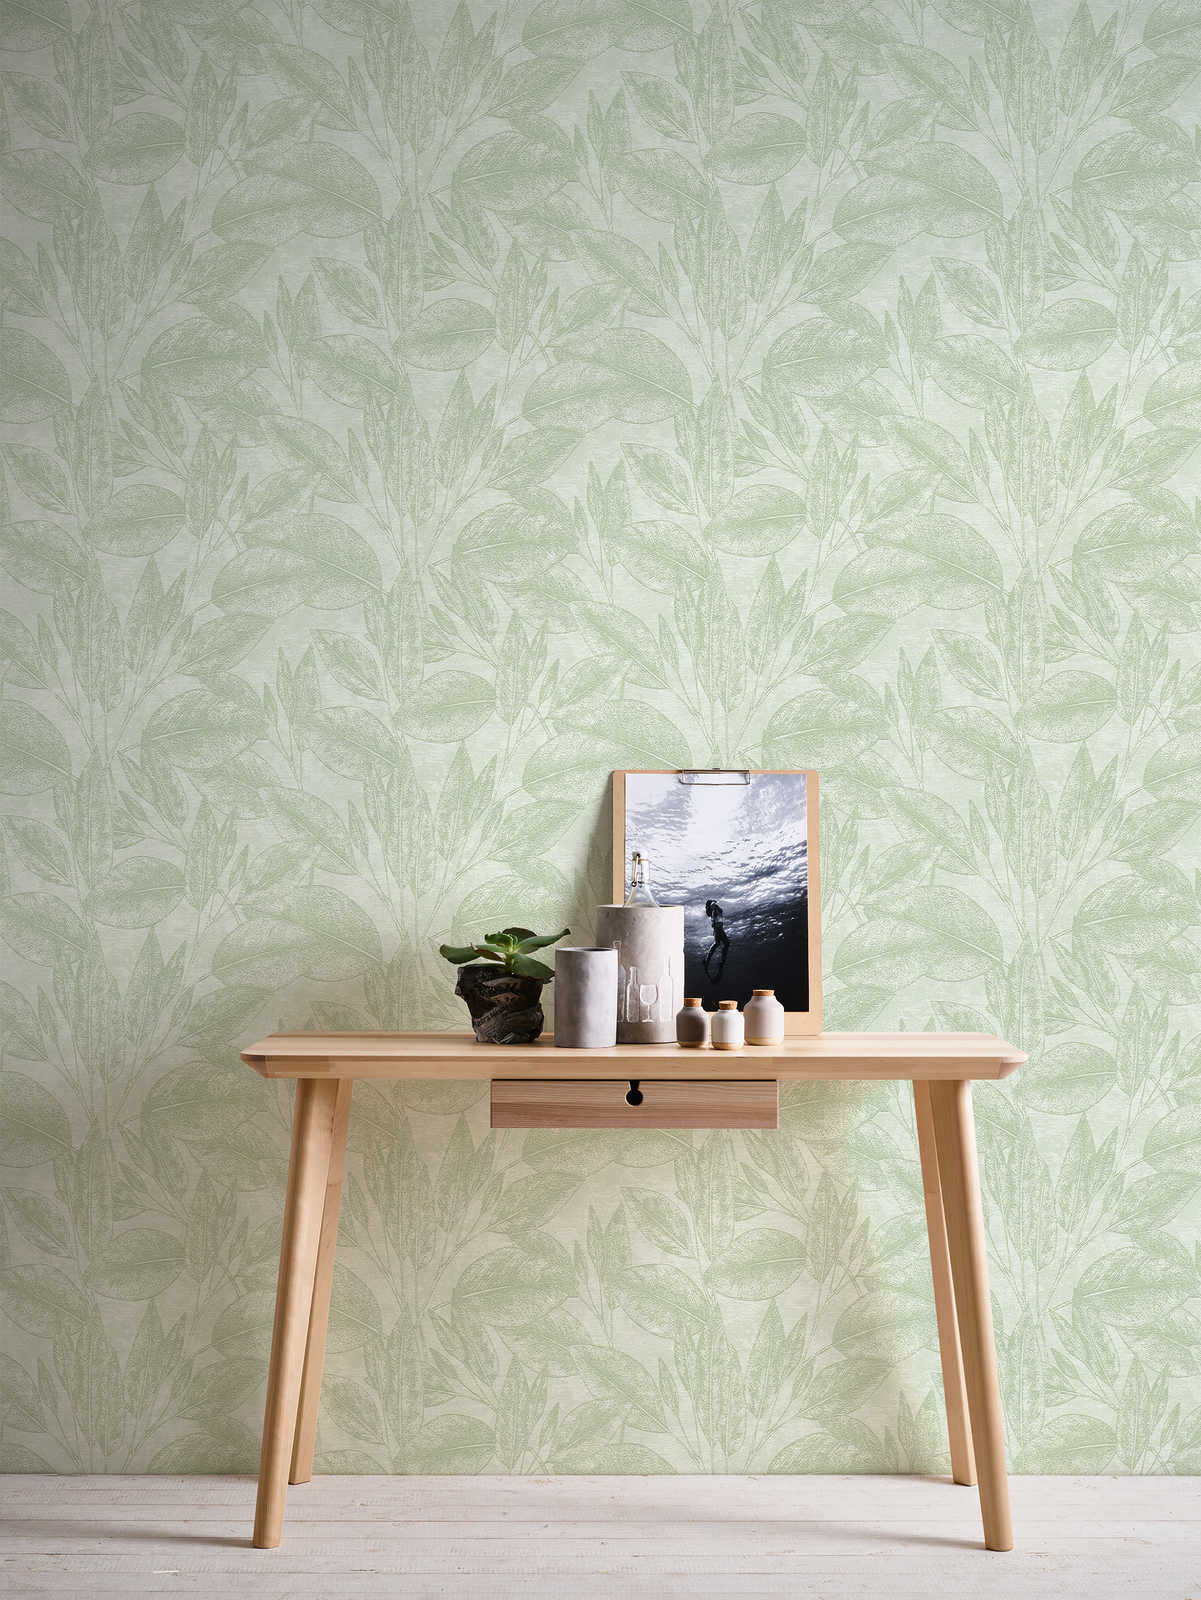             Papier peint intissé naturel avec feuilles & motifs structurés - vert
        